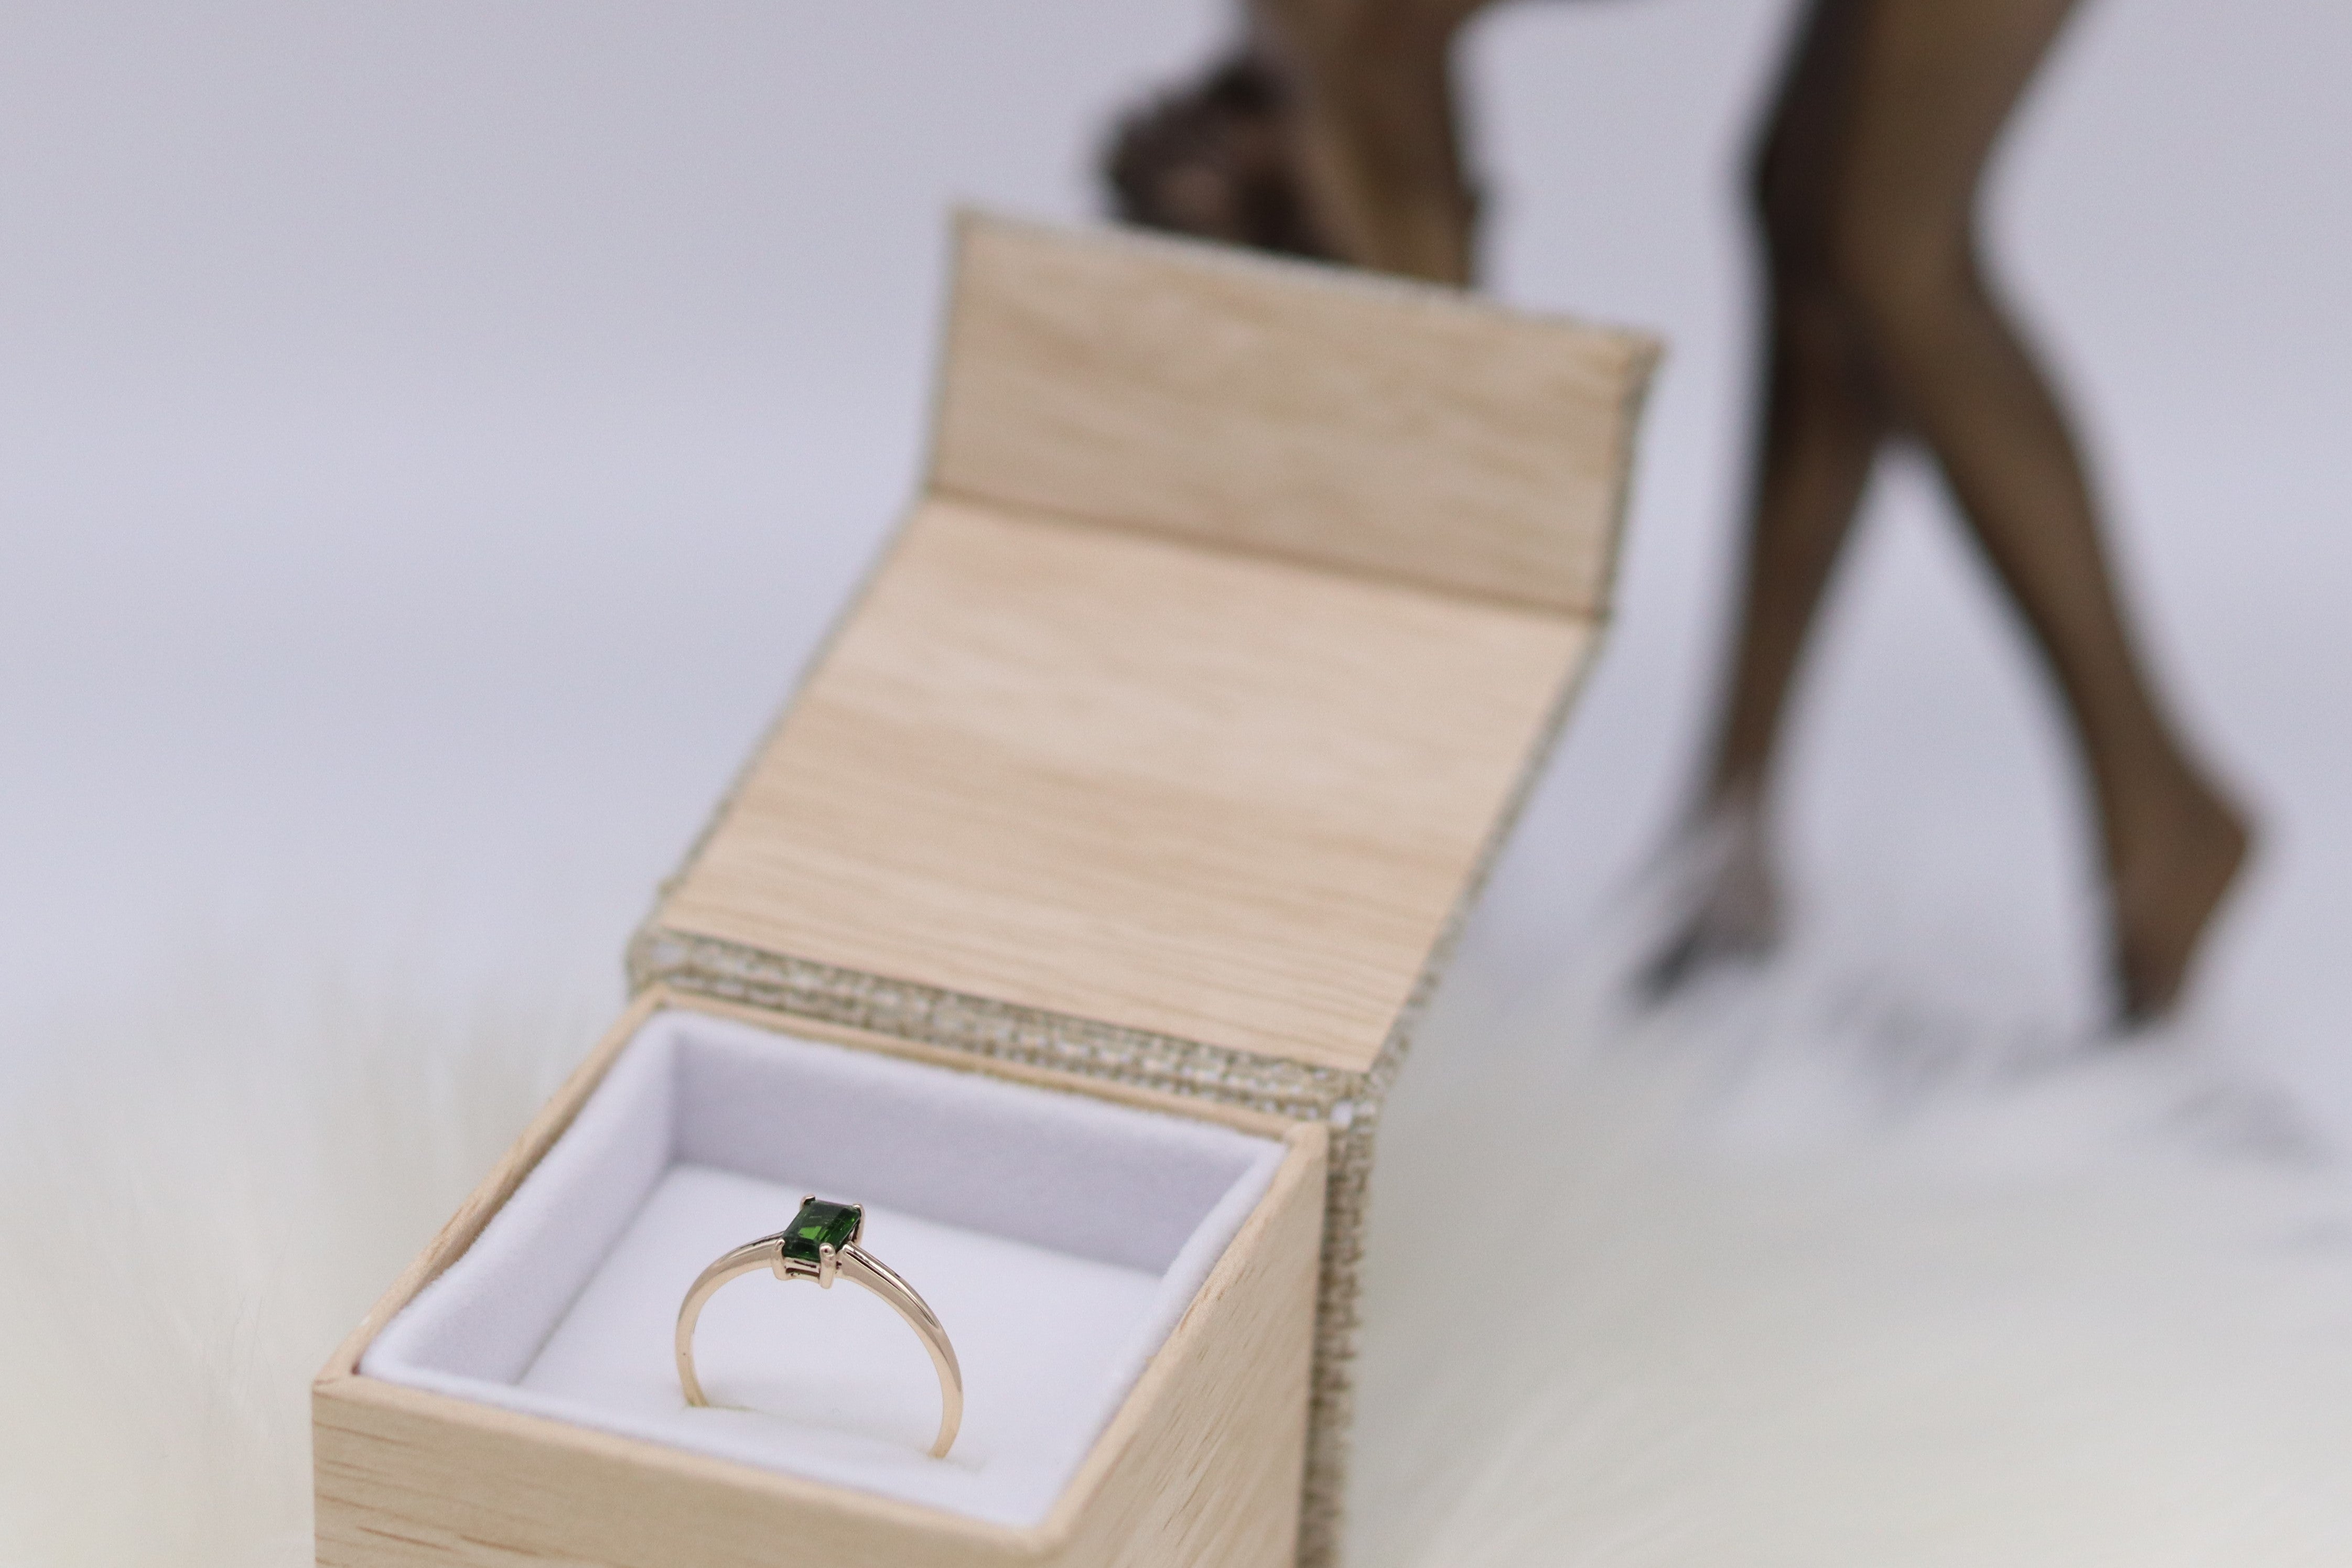 Green Imperial Siberian Emerald 14k Ring